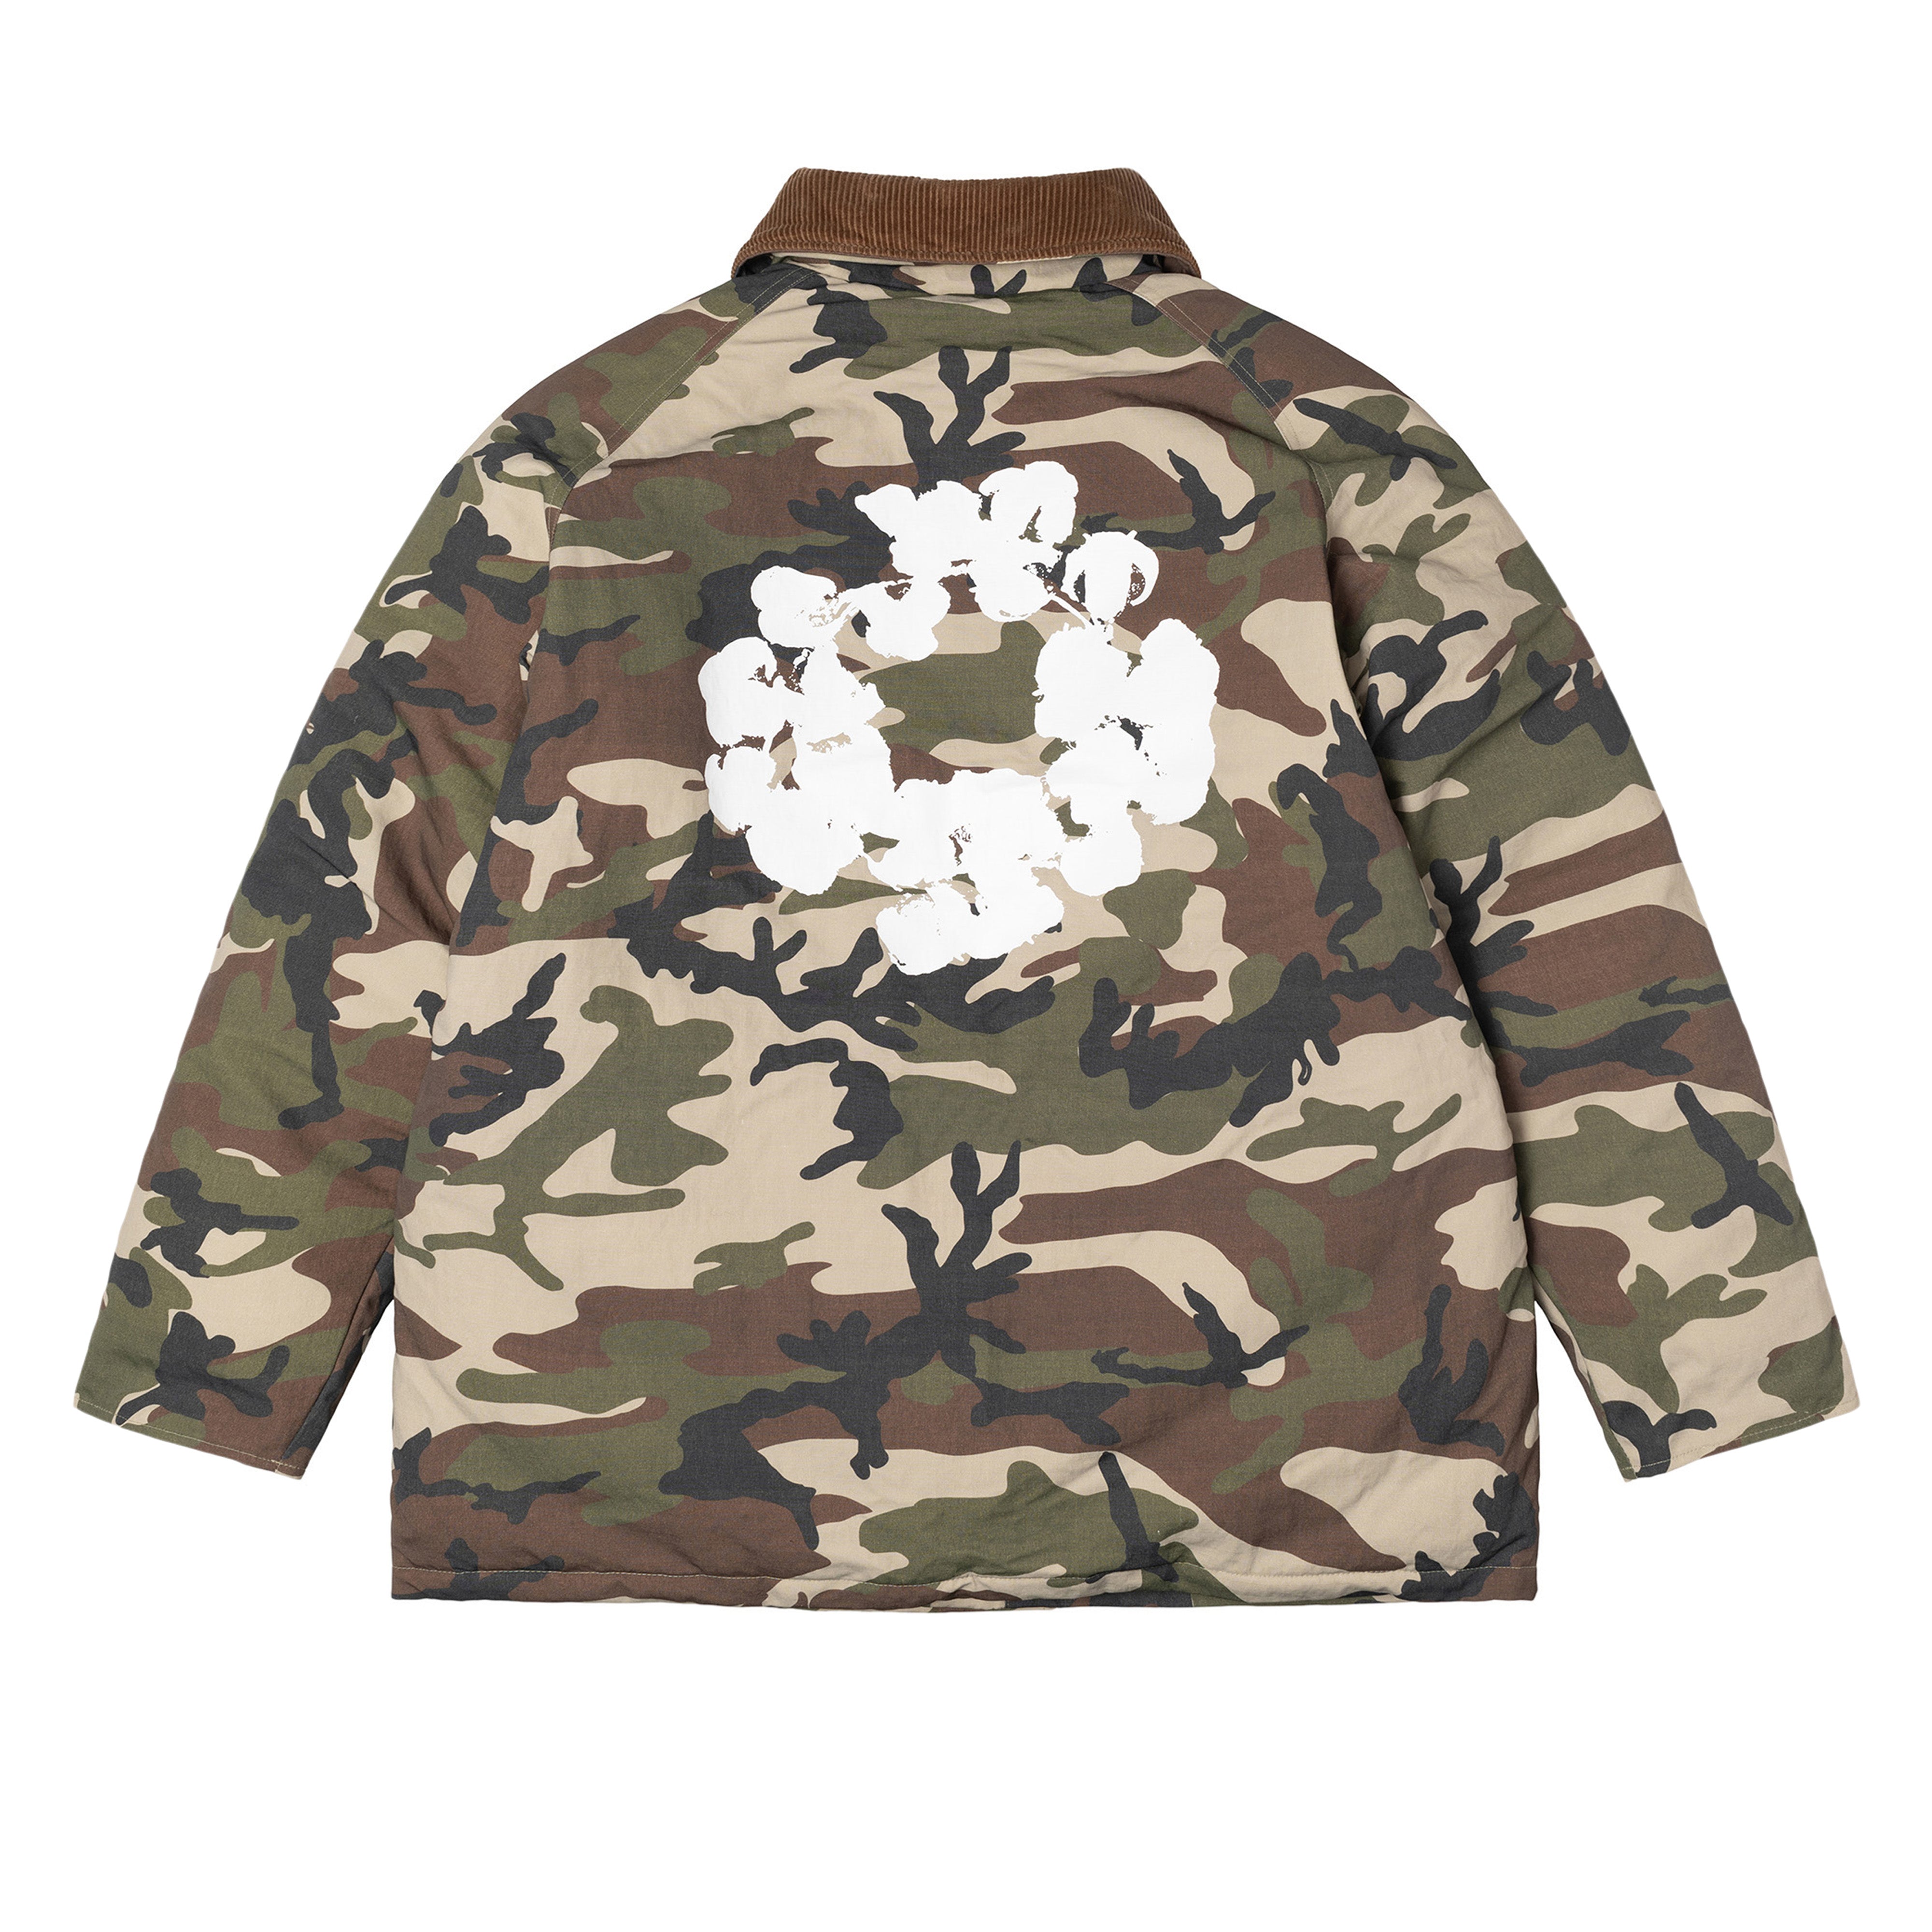 Denim Tears - Stüssy Ripstop Camouflage Army Jacket - (Camouflage)